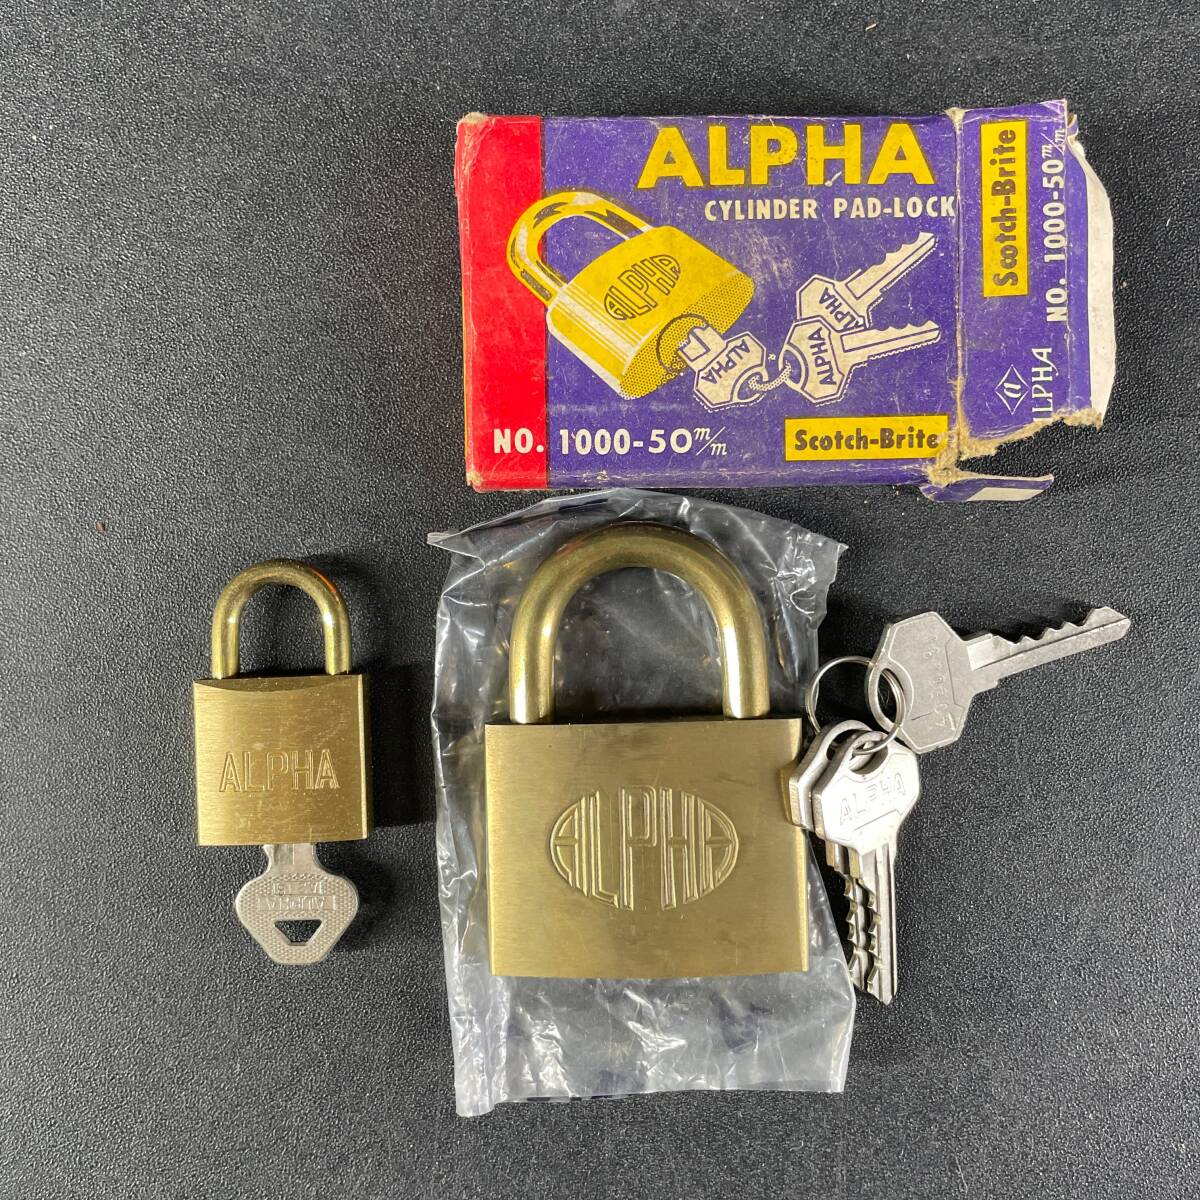 o summarize 2 point ALPHA CYLINDER PAD-LOCK /NO.950-25mm/NO.1000-50mm/ Alpha cylinder south capital pills lock locking key crime prevention /u34b